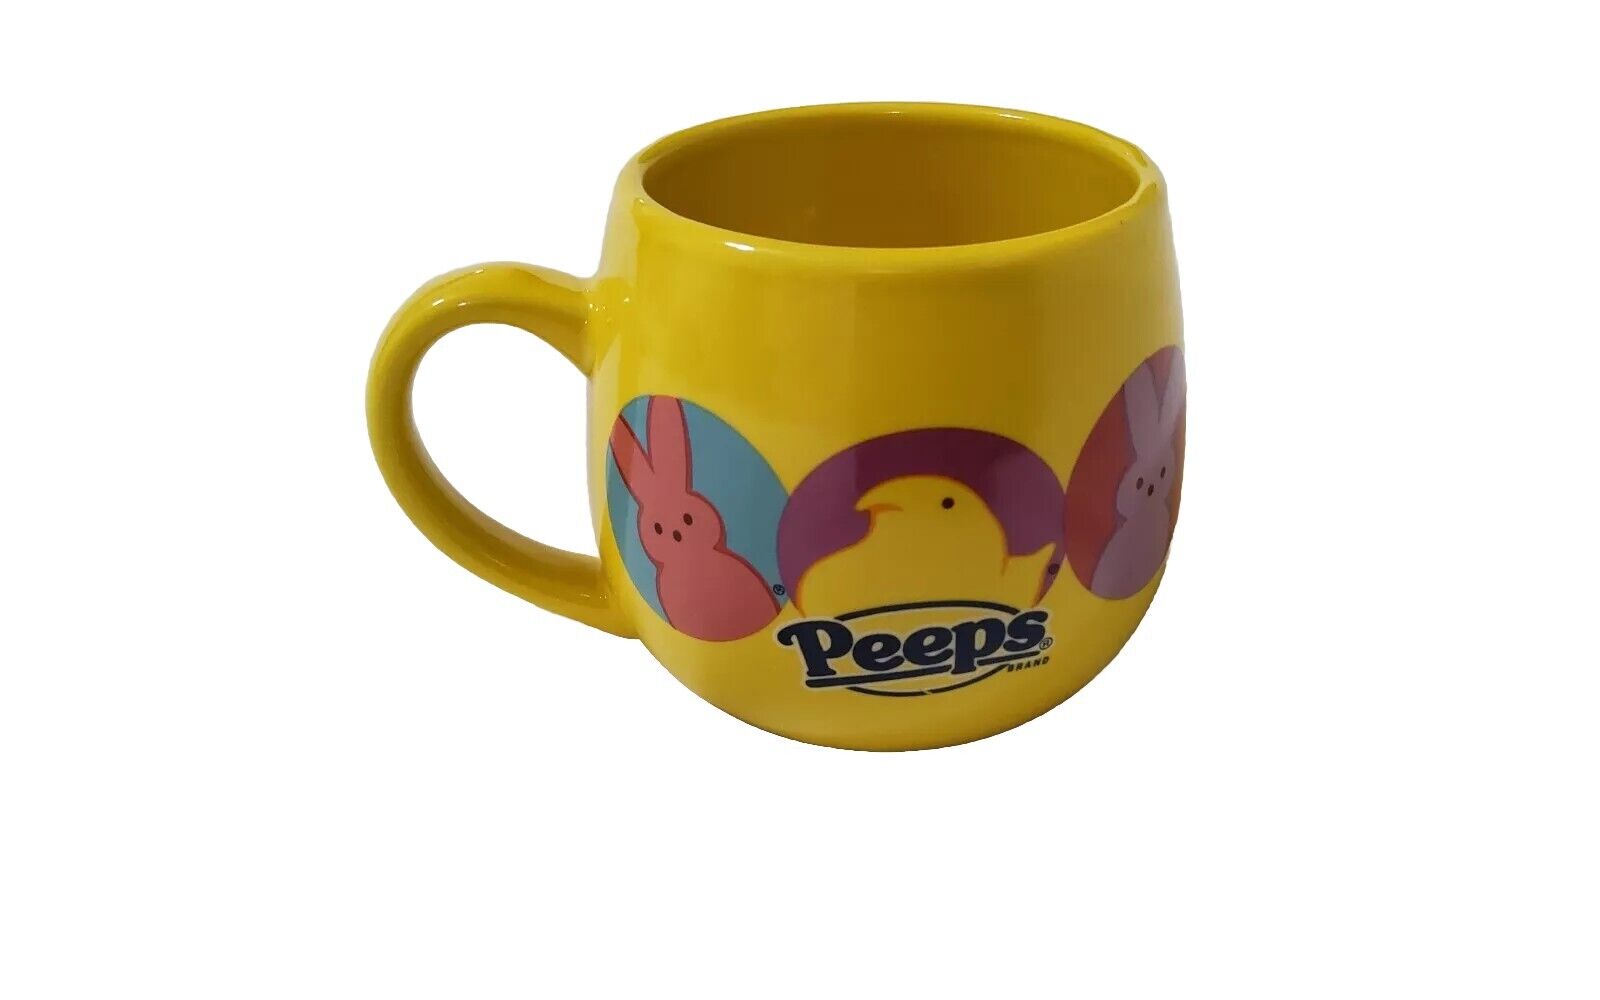 Peeps Brand Just Born Inc Yellow Coffee Mug Multicolored Bunnies & Chicks Easter